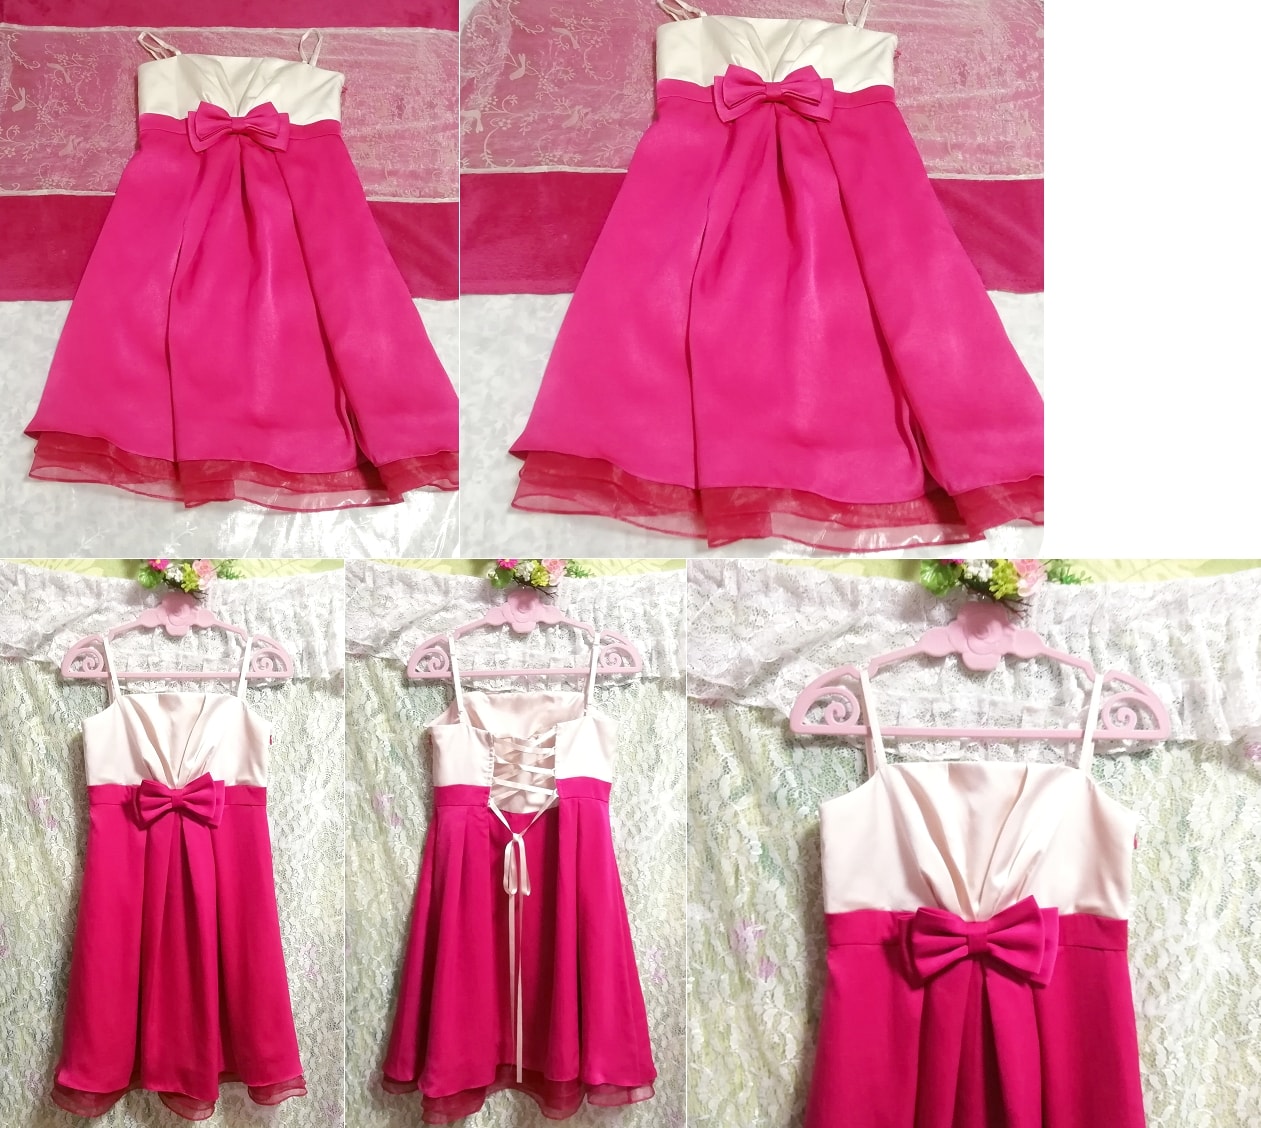 Shrine maiden-style negligee nightgown camisole dress magenta organza skirt, knee length skirt, m size